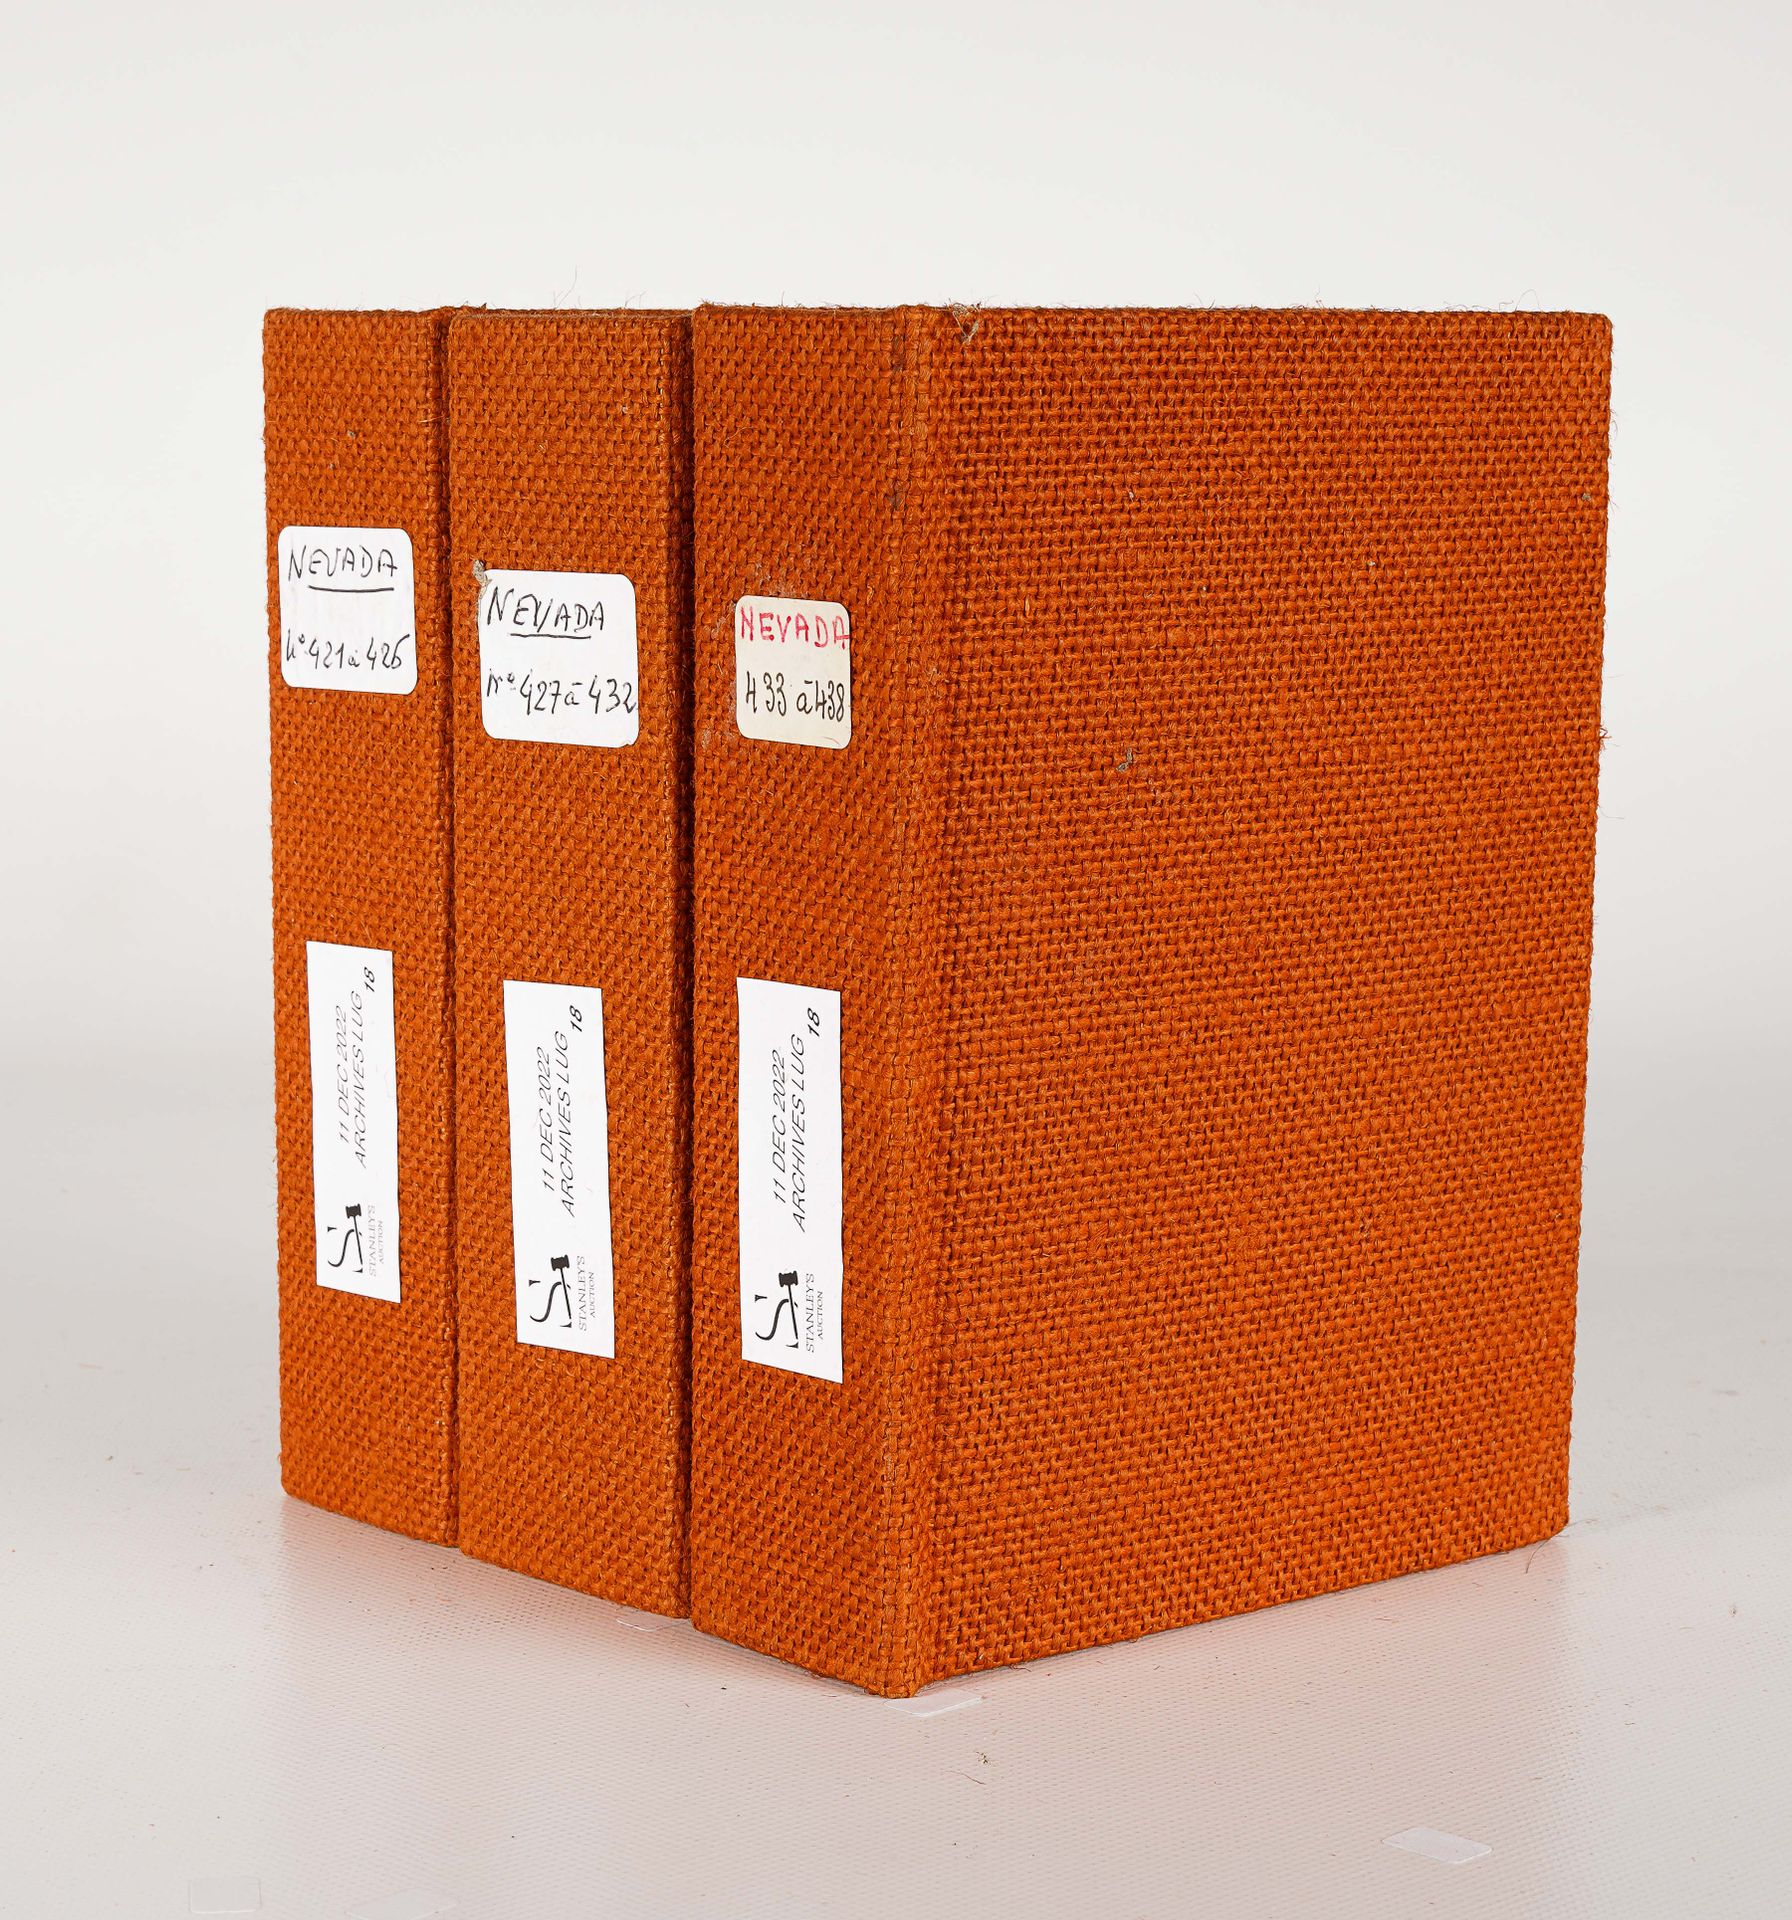 LUG SEMIC, ARCHIVES COMICS 三个带有NEVADA编号421至438的LUG活页夹，橙色布，尺寸为H 18 x 13厘米